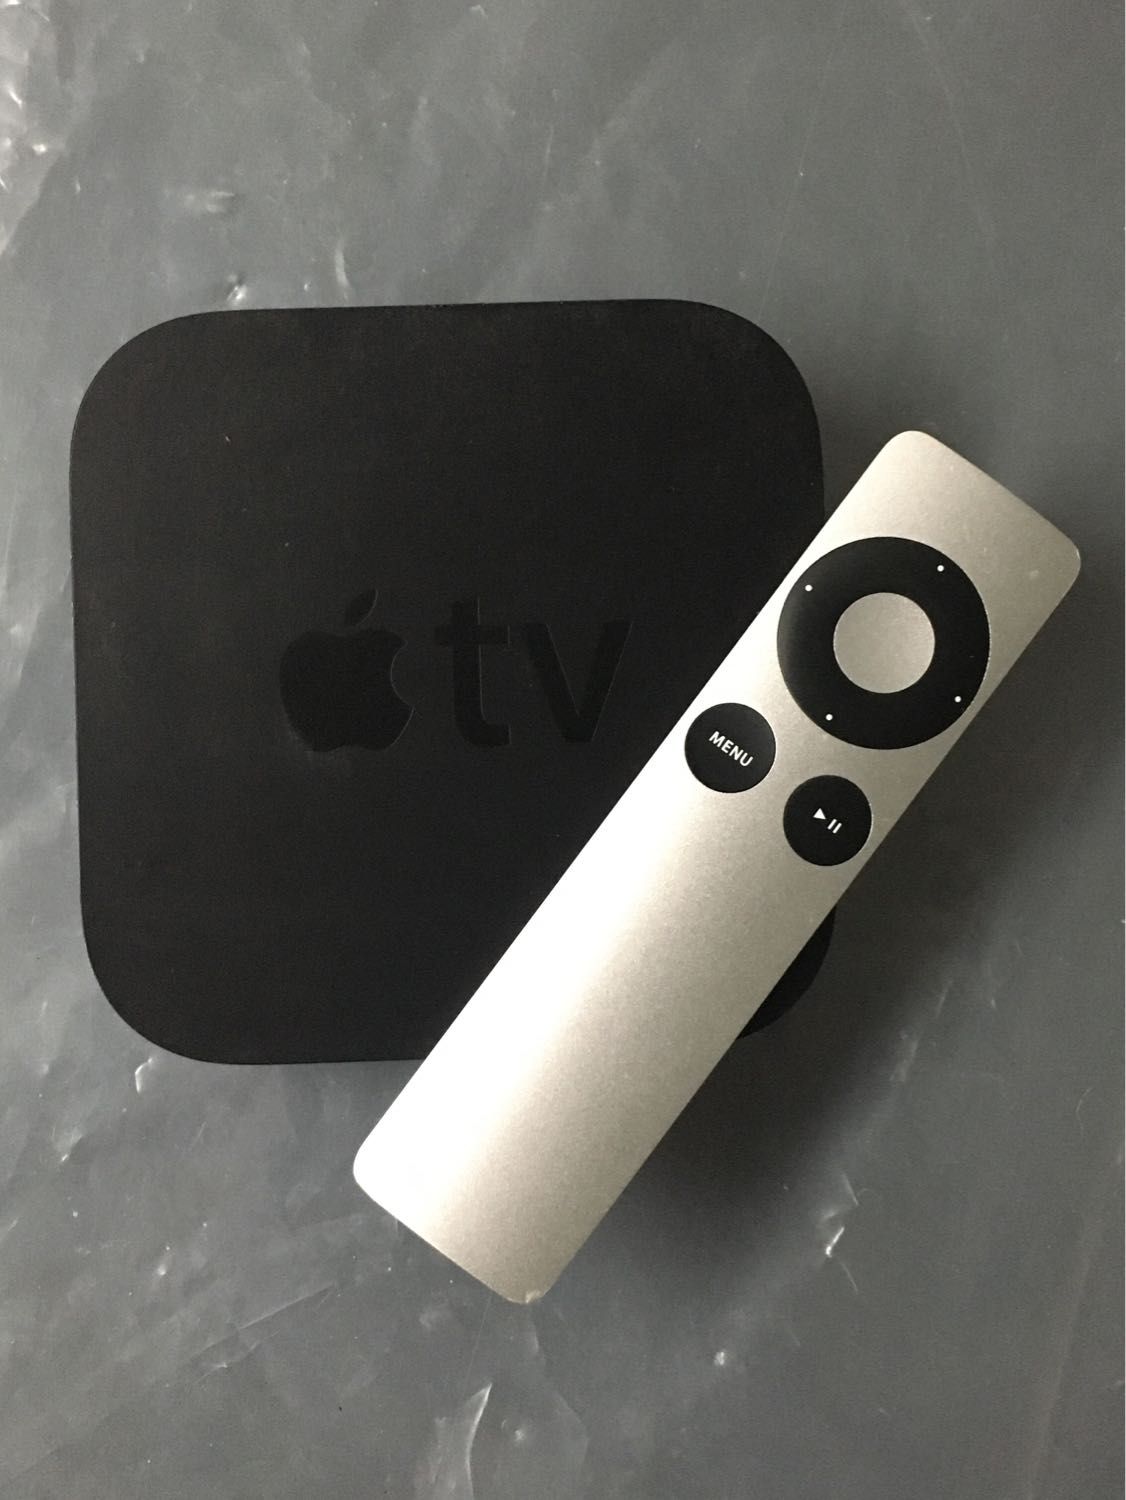 Apple TV 2 (A1378)